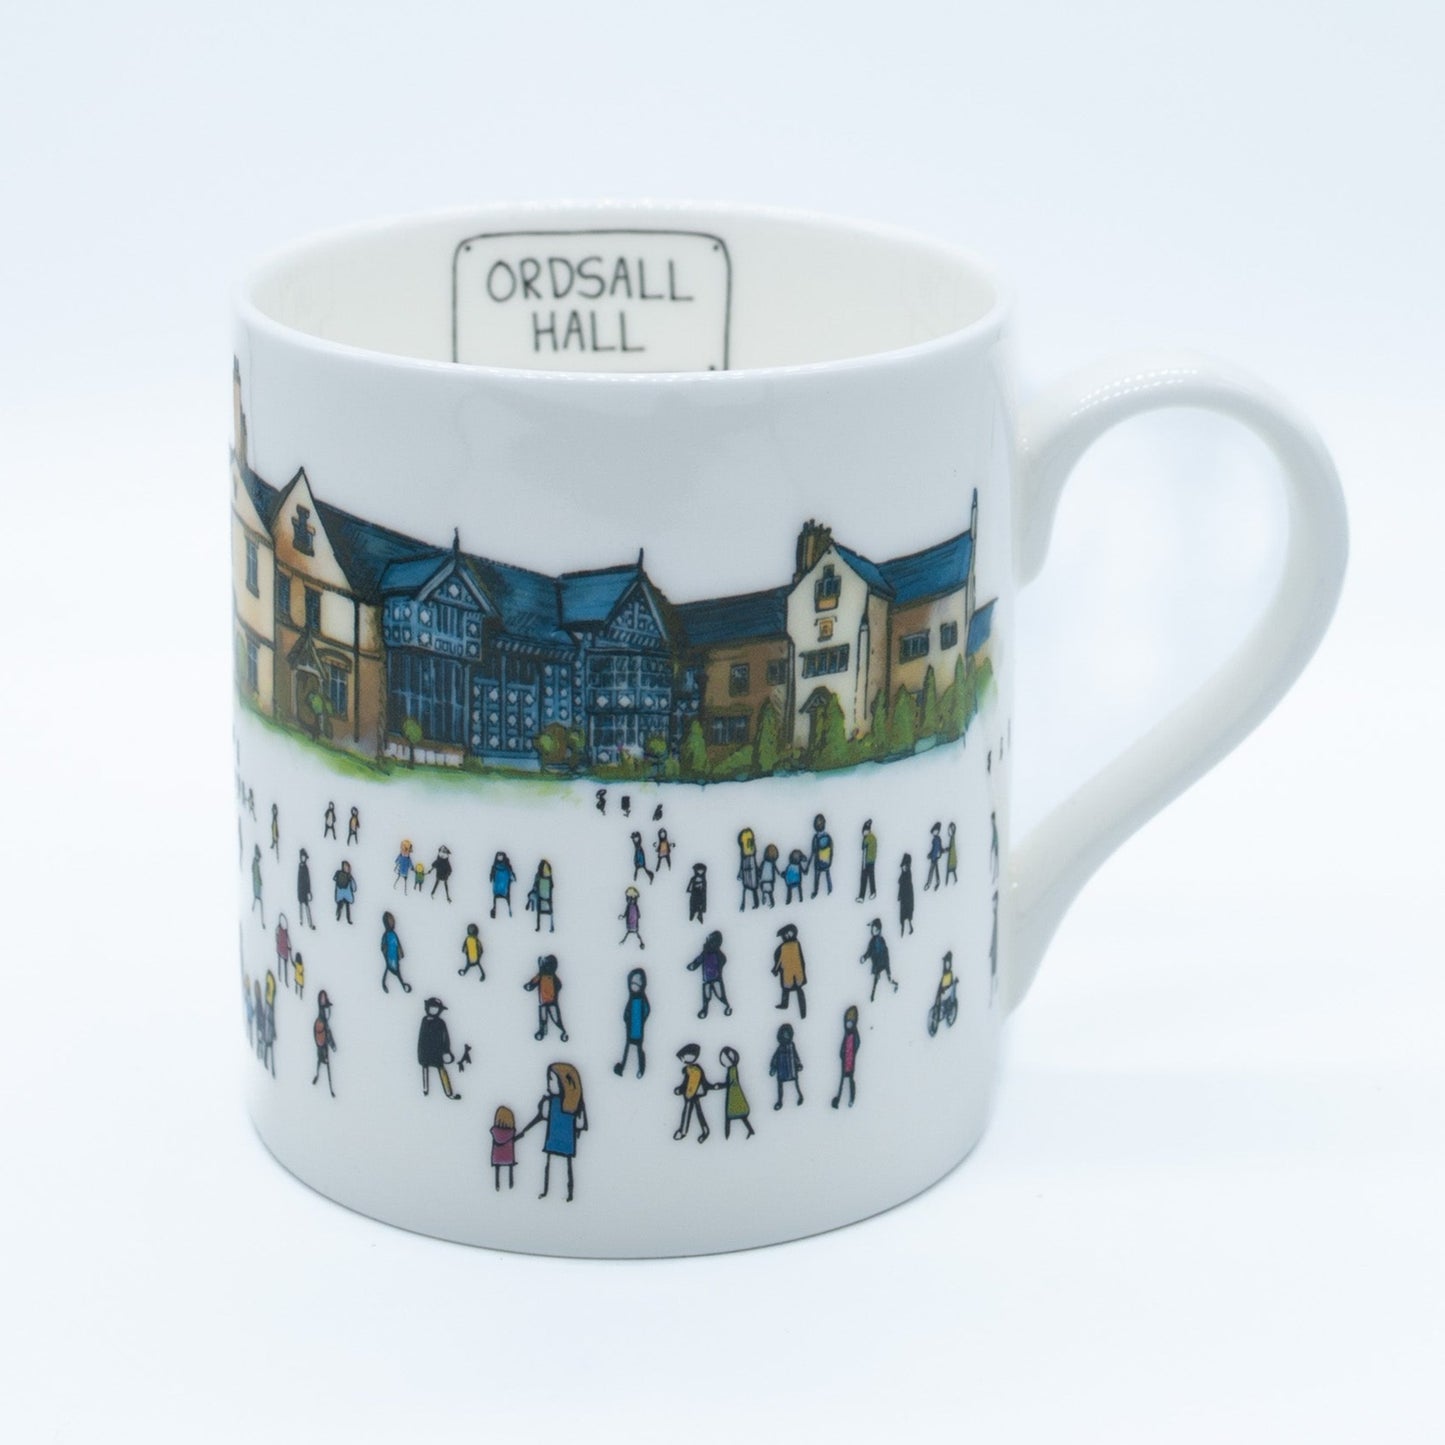 Ordsall Hall inspired Bone China Mug by Foley Pottery